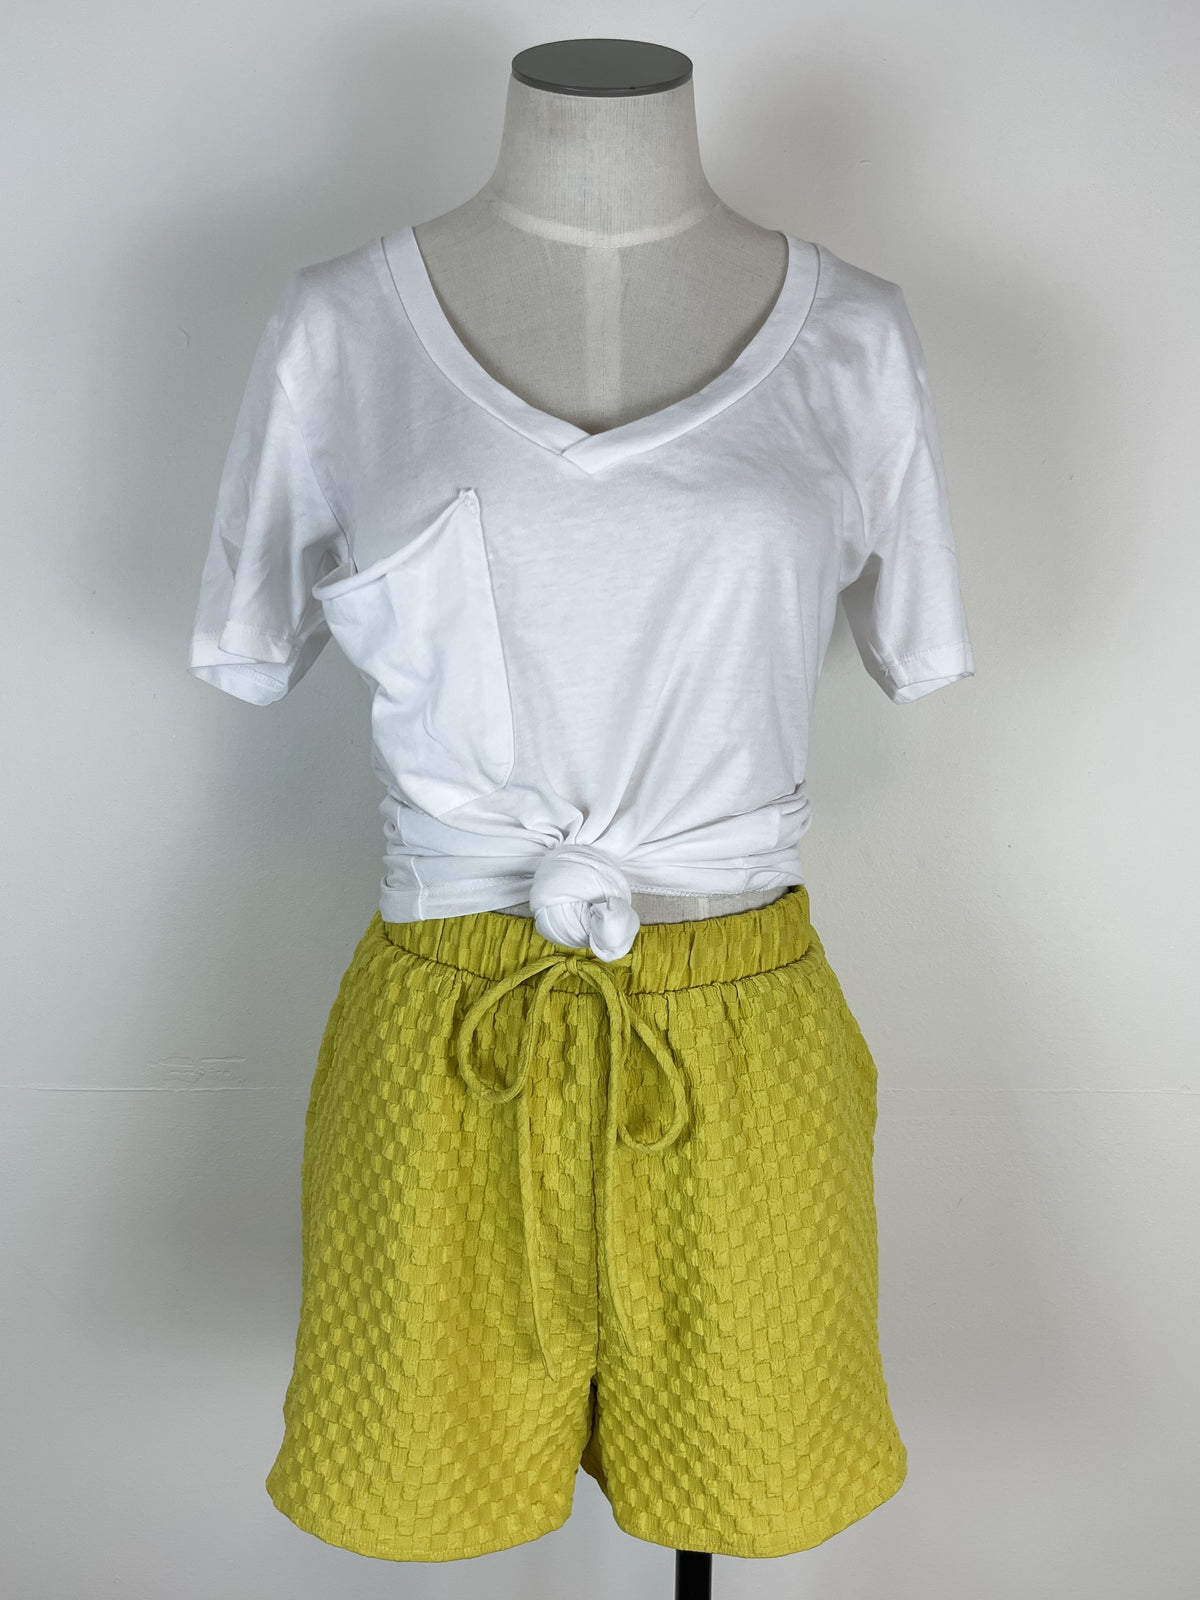 Gingham Seersucker Shorts in Chartreuse Yellow